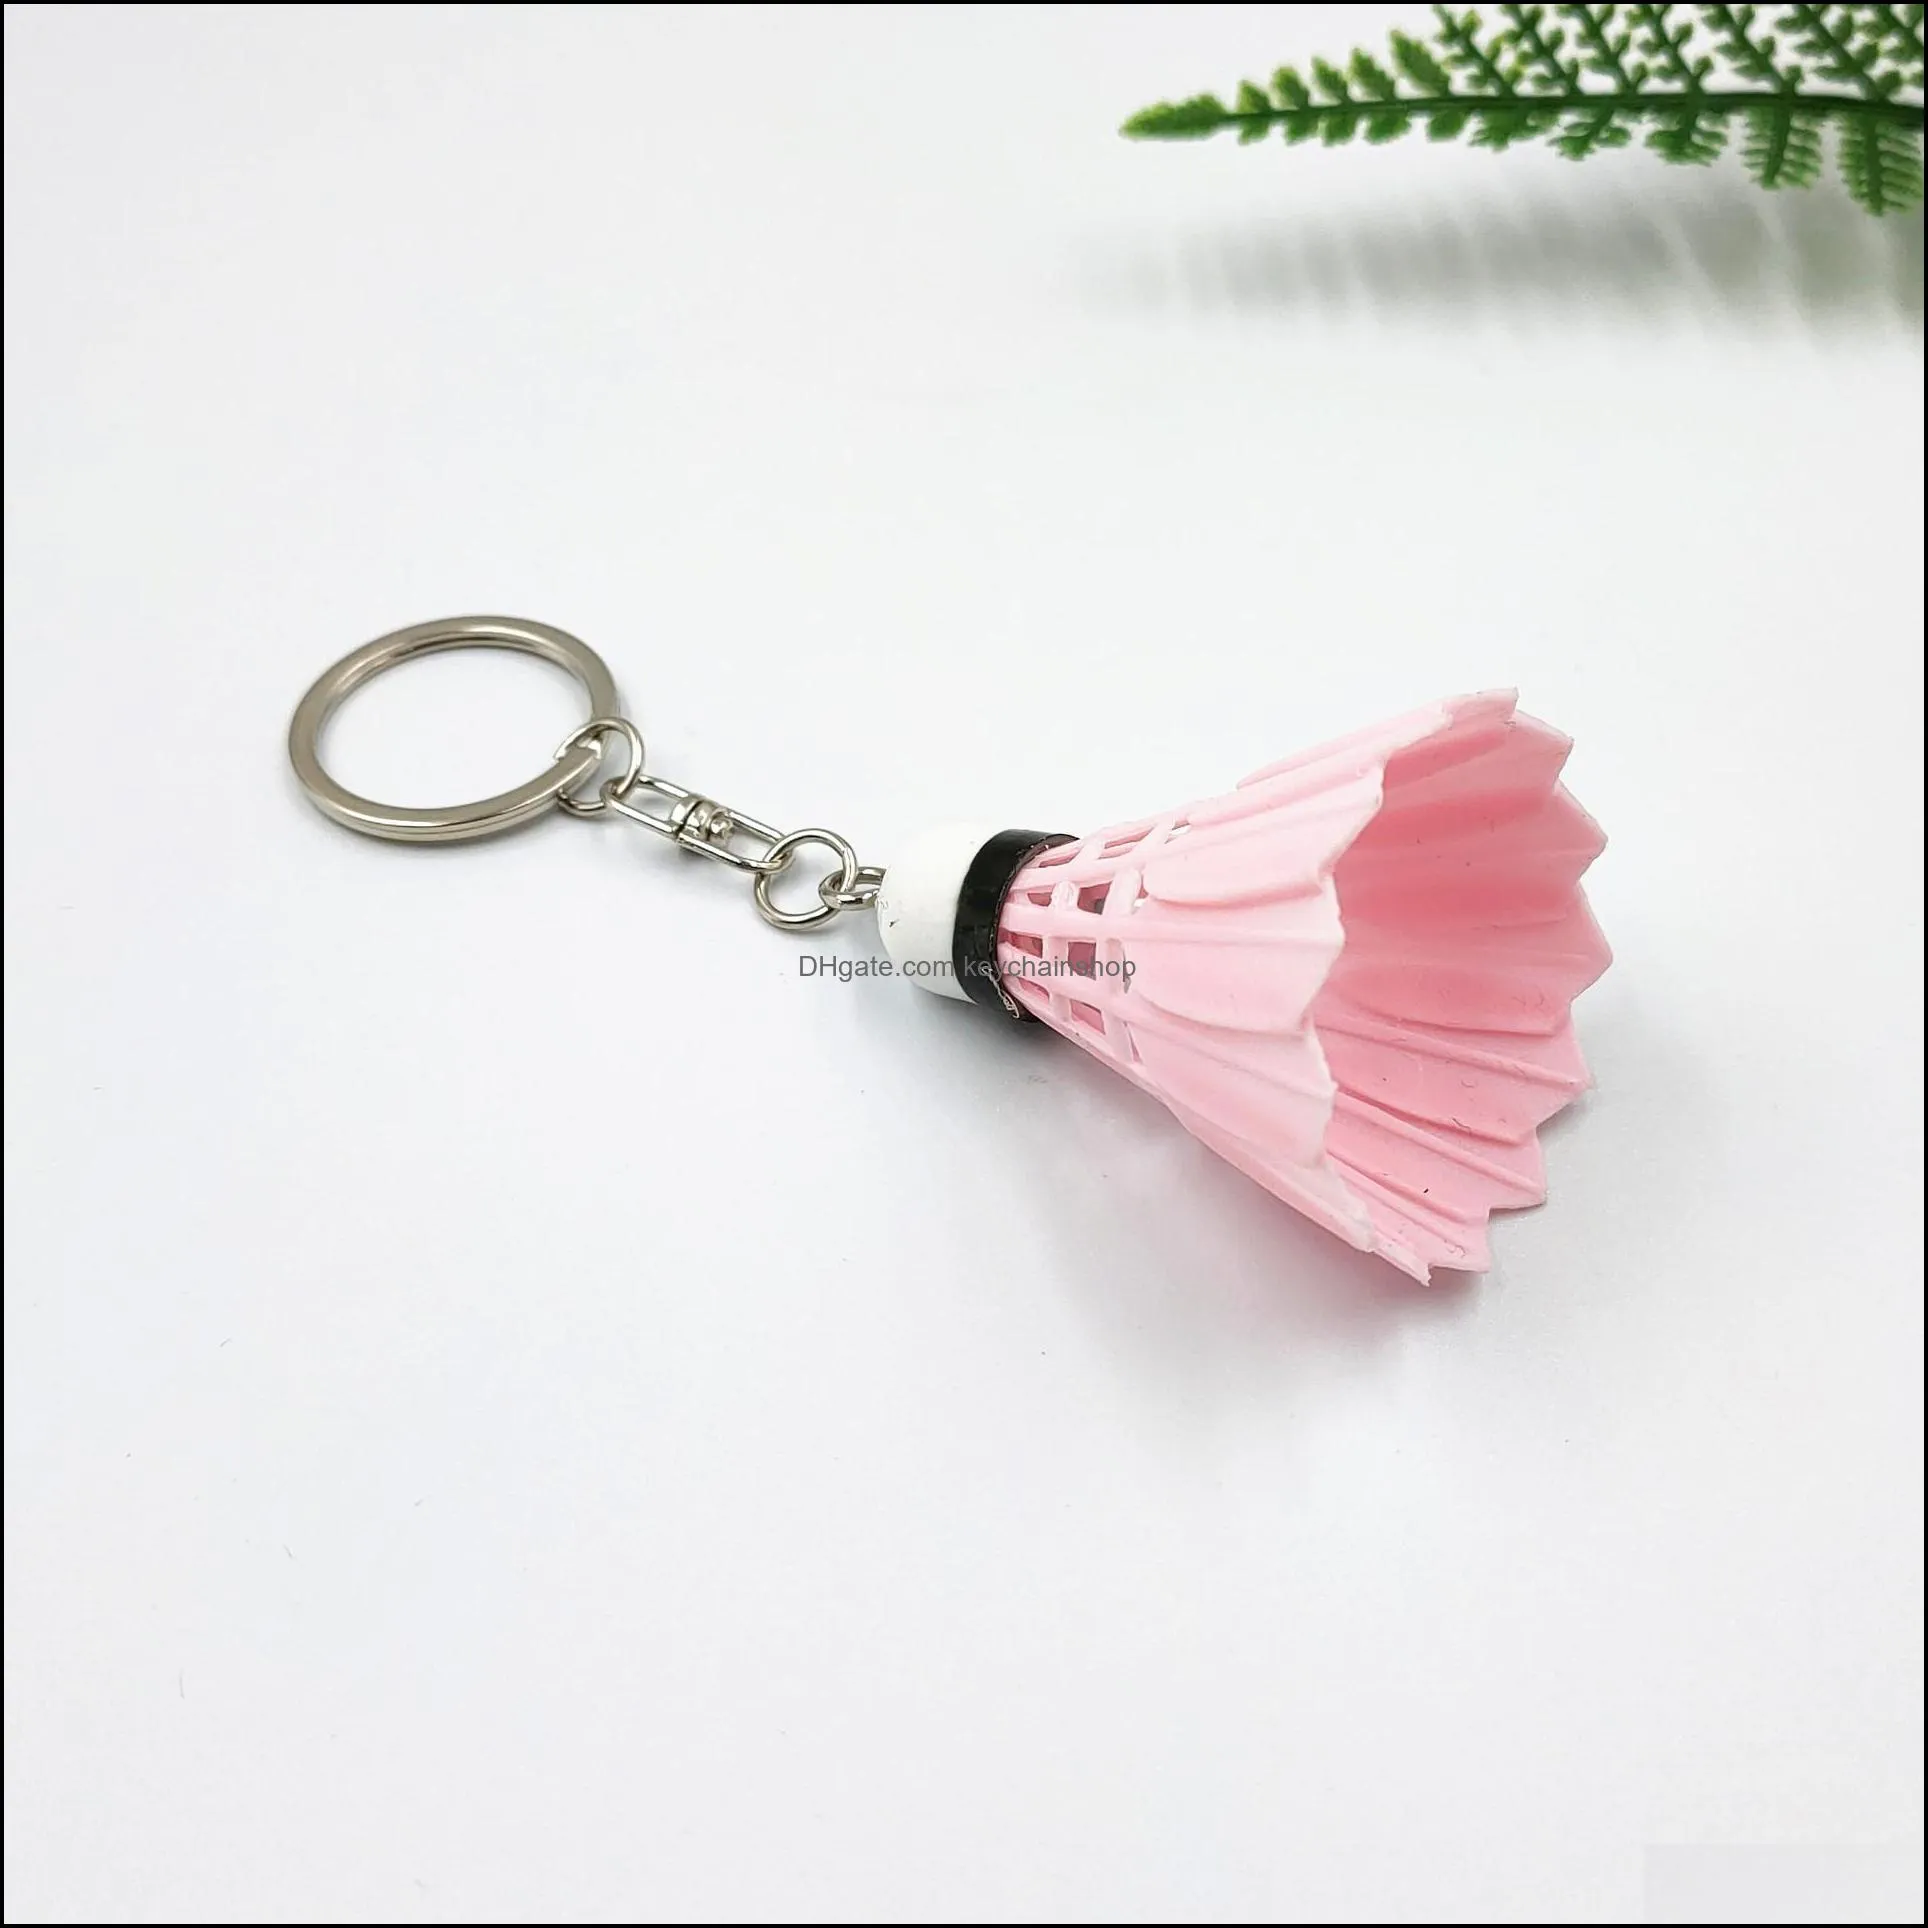 6 colors creative mnini pvc badminton keychains pendant sports small key chain bag charm car keyrings gift accessories